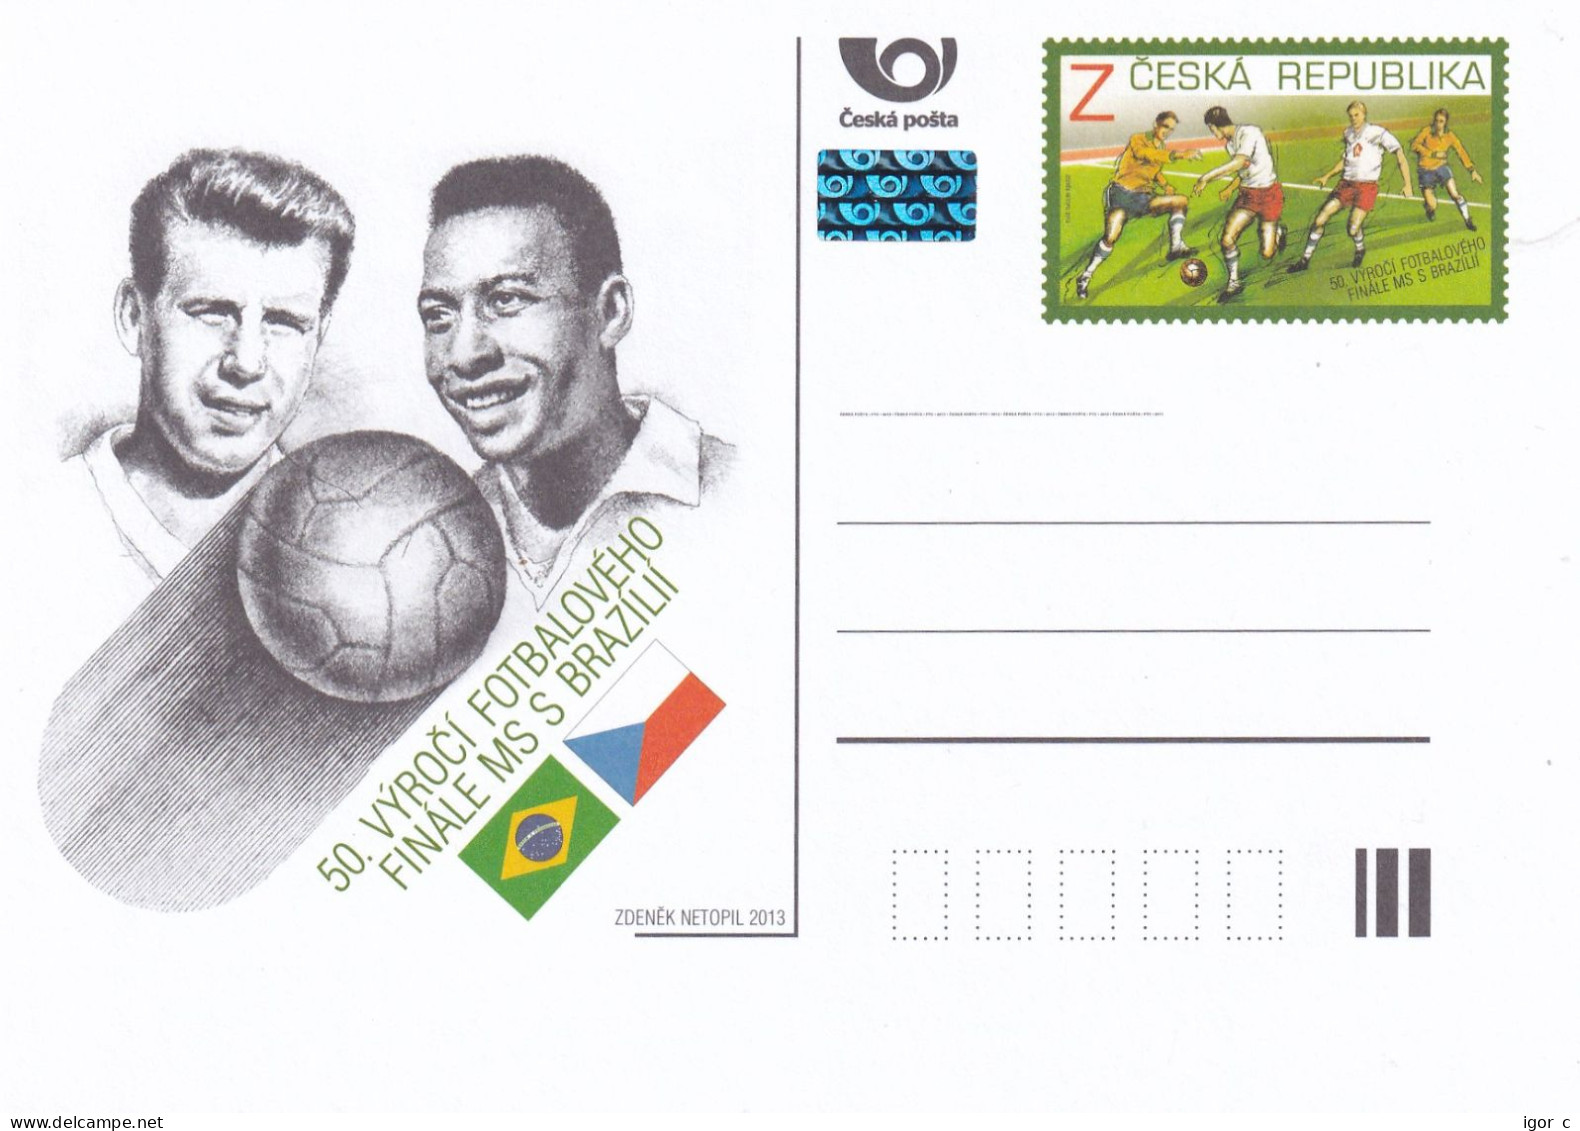 Czech Republic PS Card 2013: Football Fussball Soccer Calcio; FIFA World Cup Chille Chile Final Czechoslobvakia - Brazil - 1962 – Cile